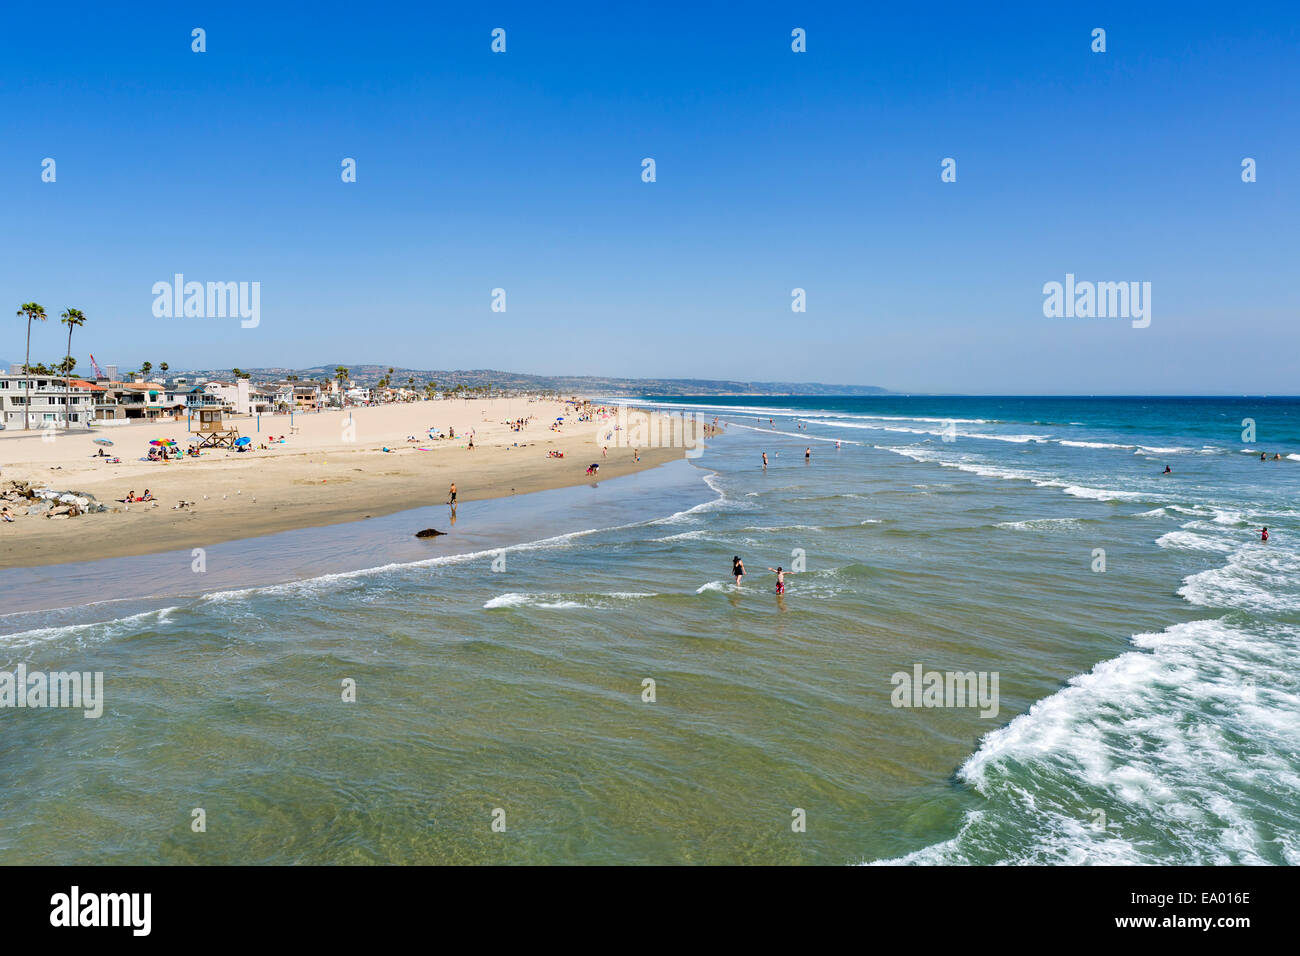 The beach from the pier, Balboa Peninsula, Newport Beach, Orange County, California, USA Stock Photo